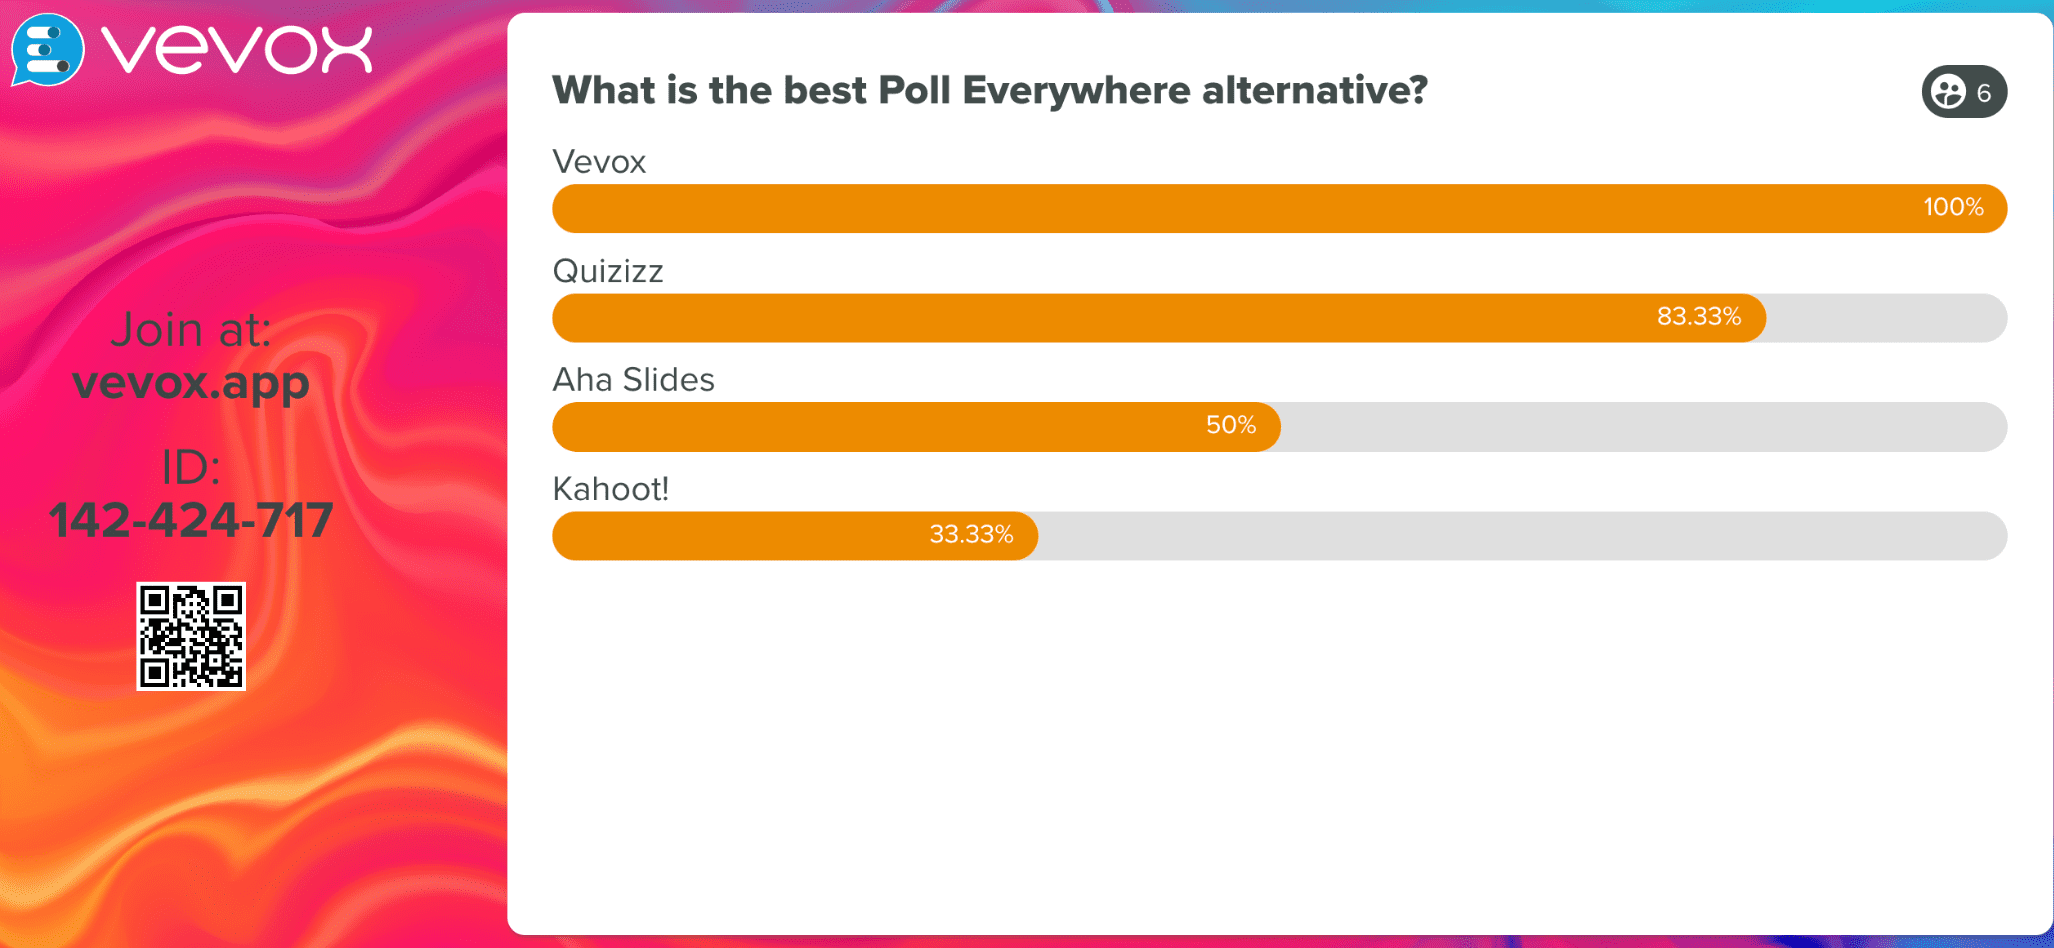 4 of the best Poll Everywhere alternatives